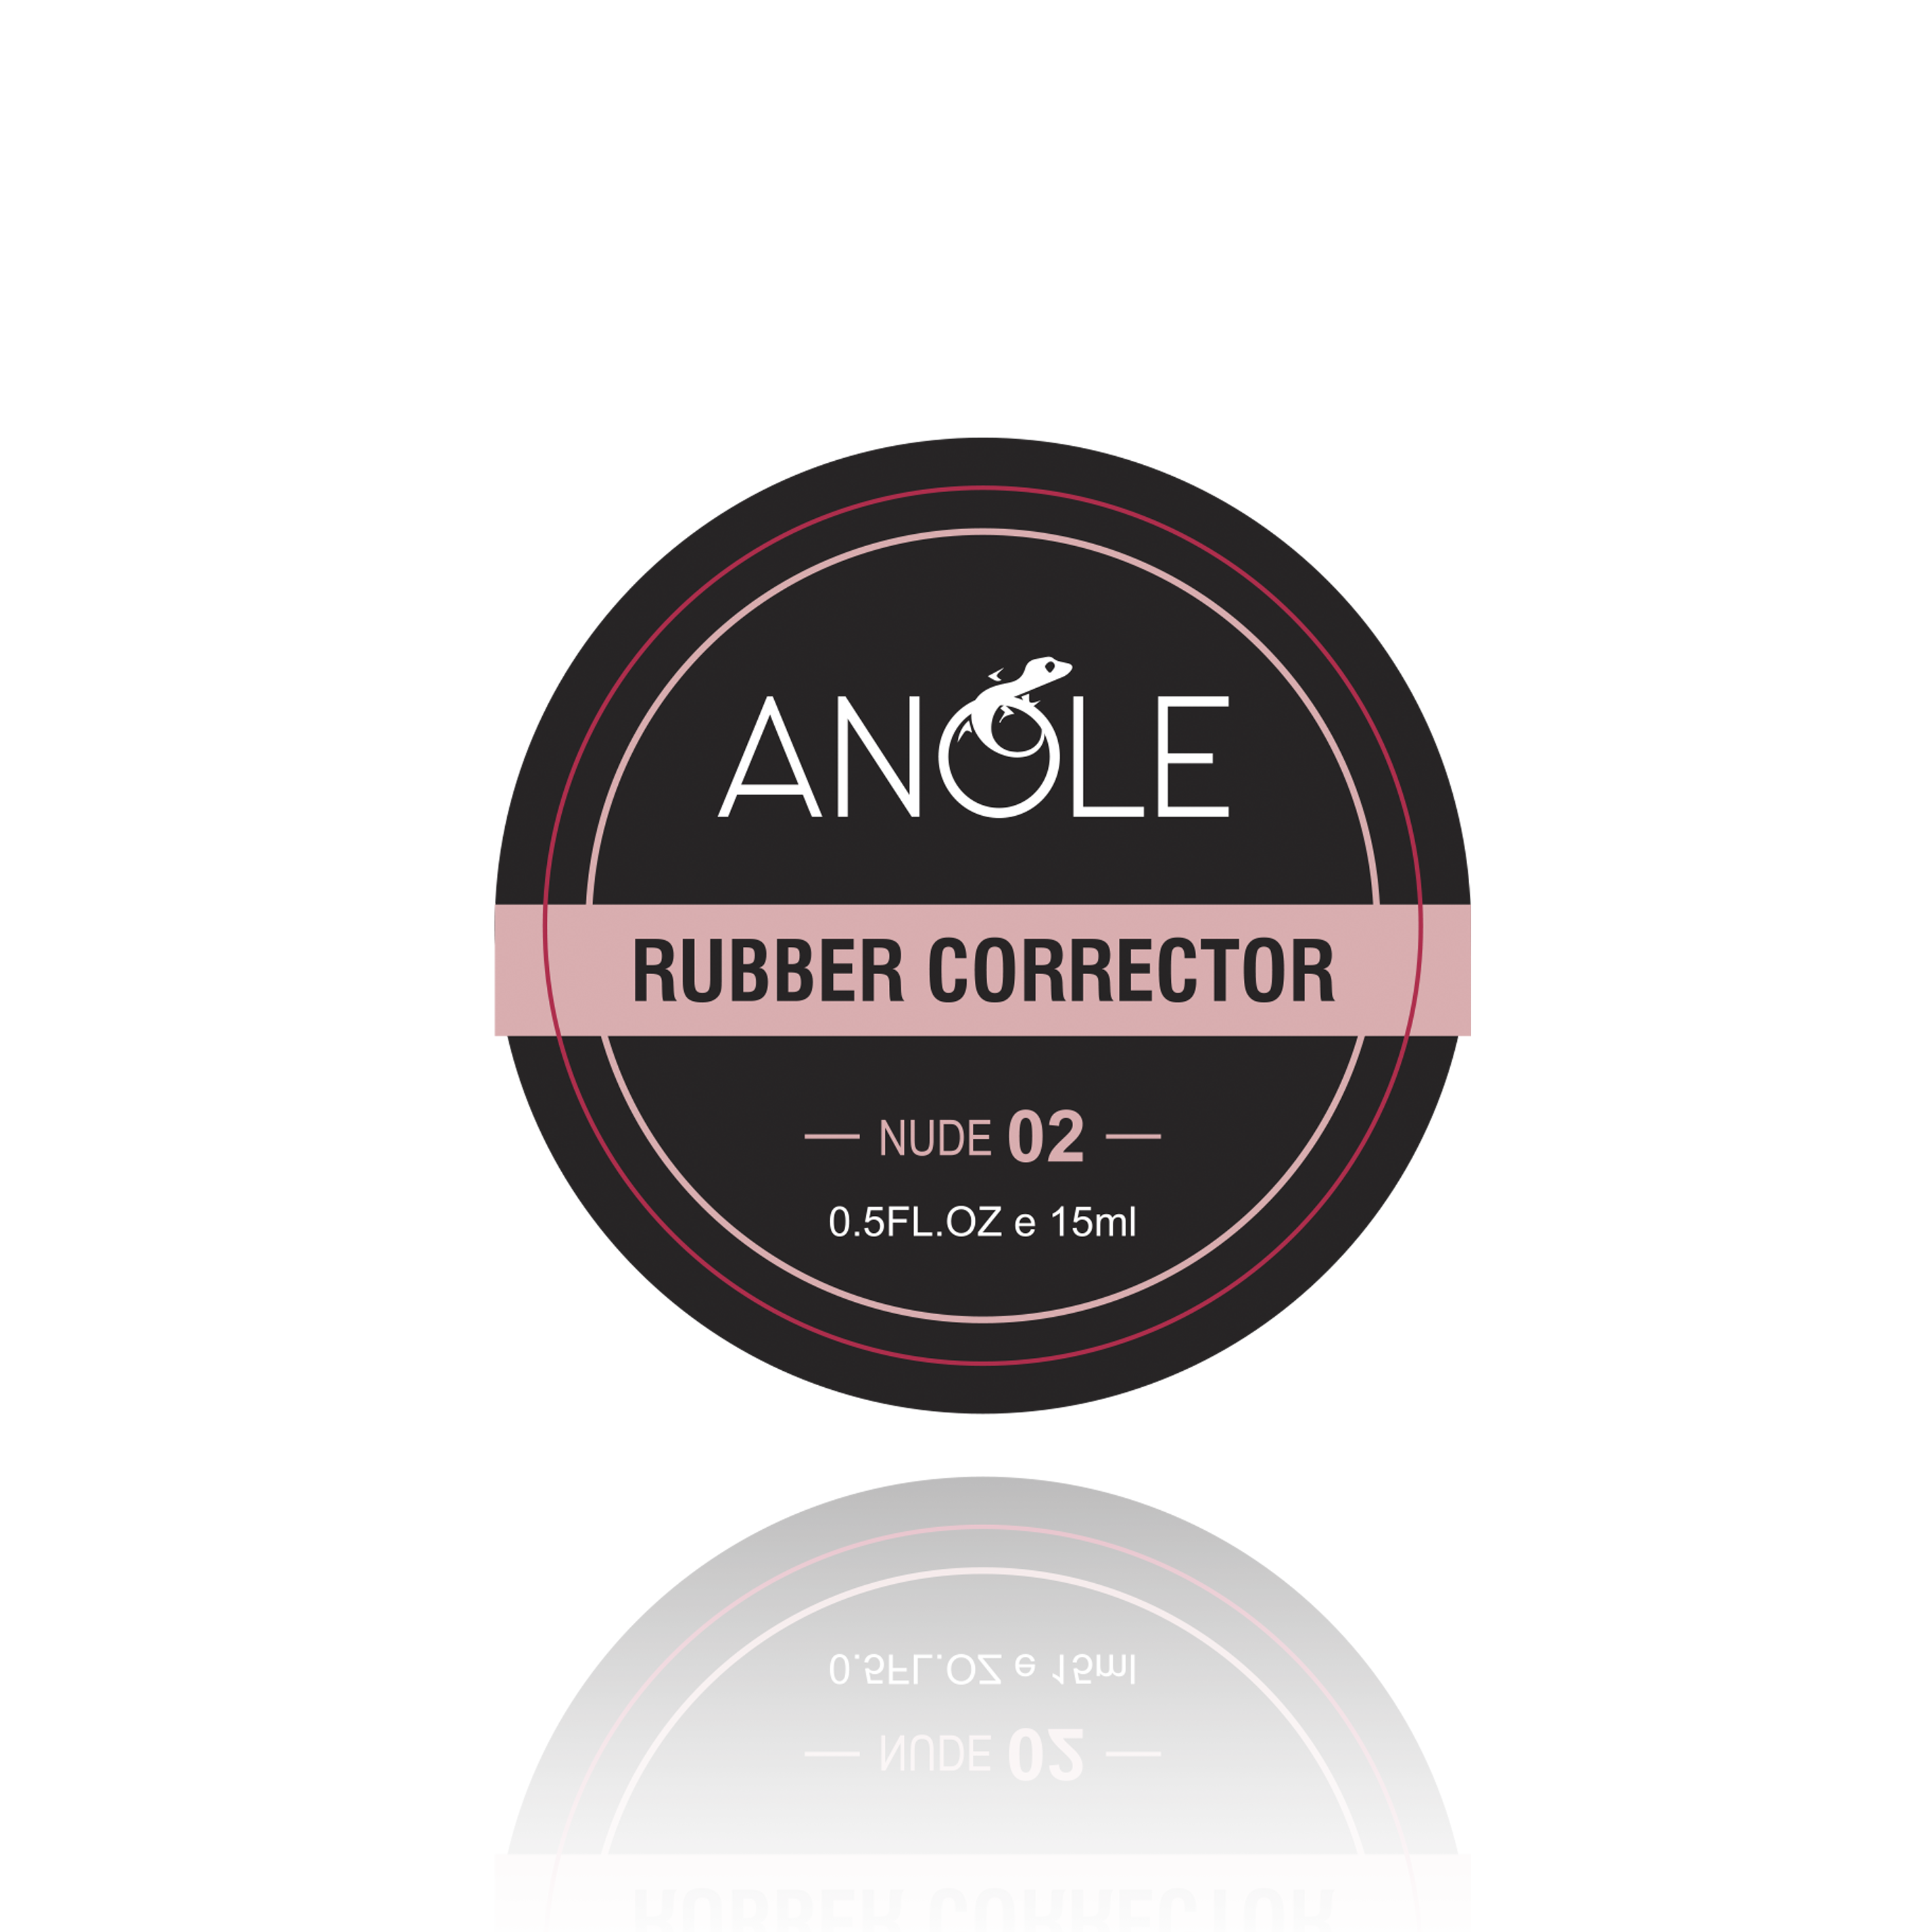 anole rubber corrector nude 2